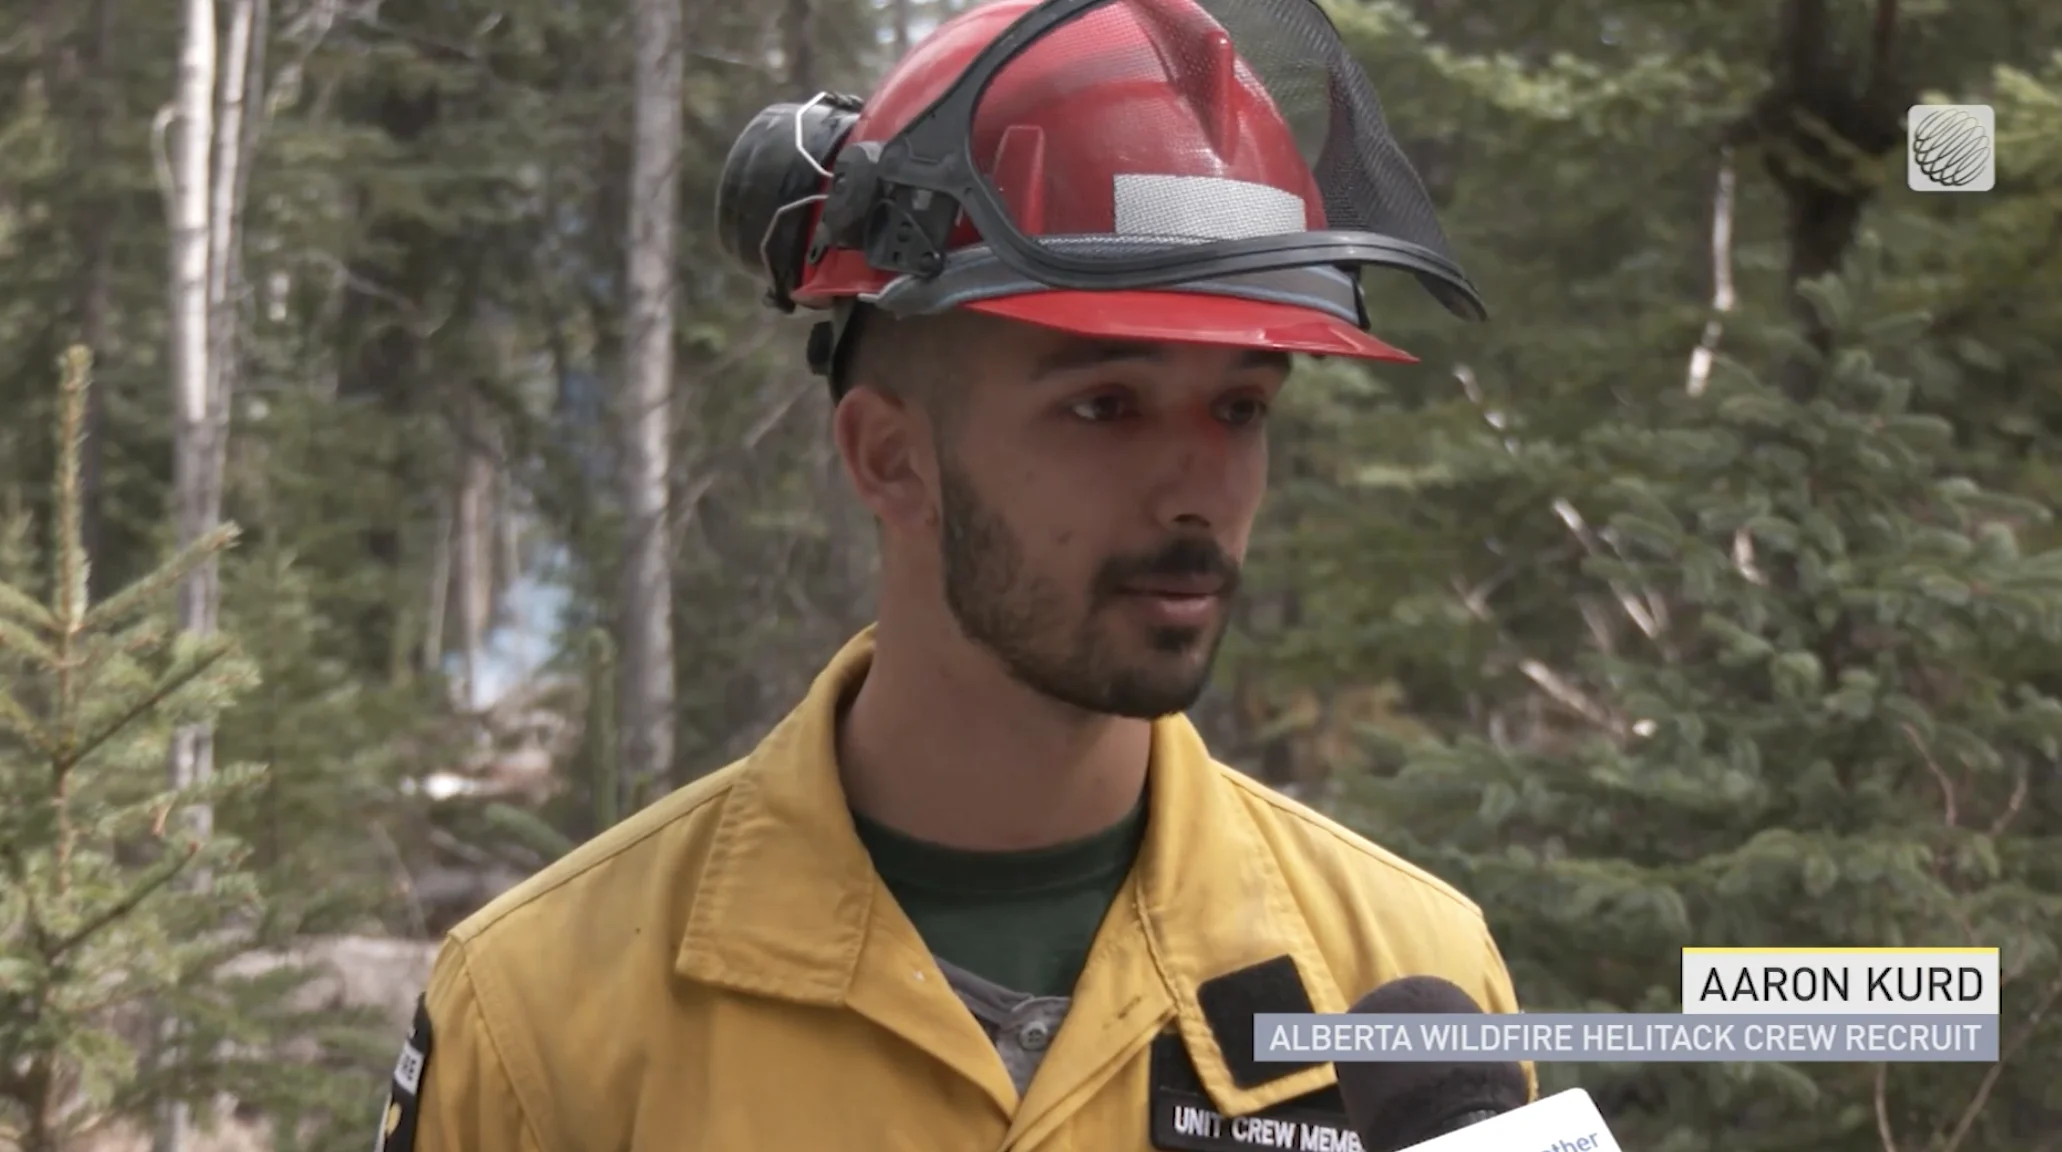 Connor O'Donovan: Aaron Kurd, firefighter for Alberta